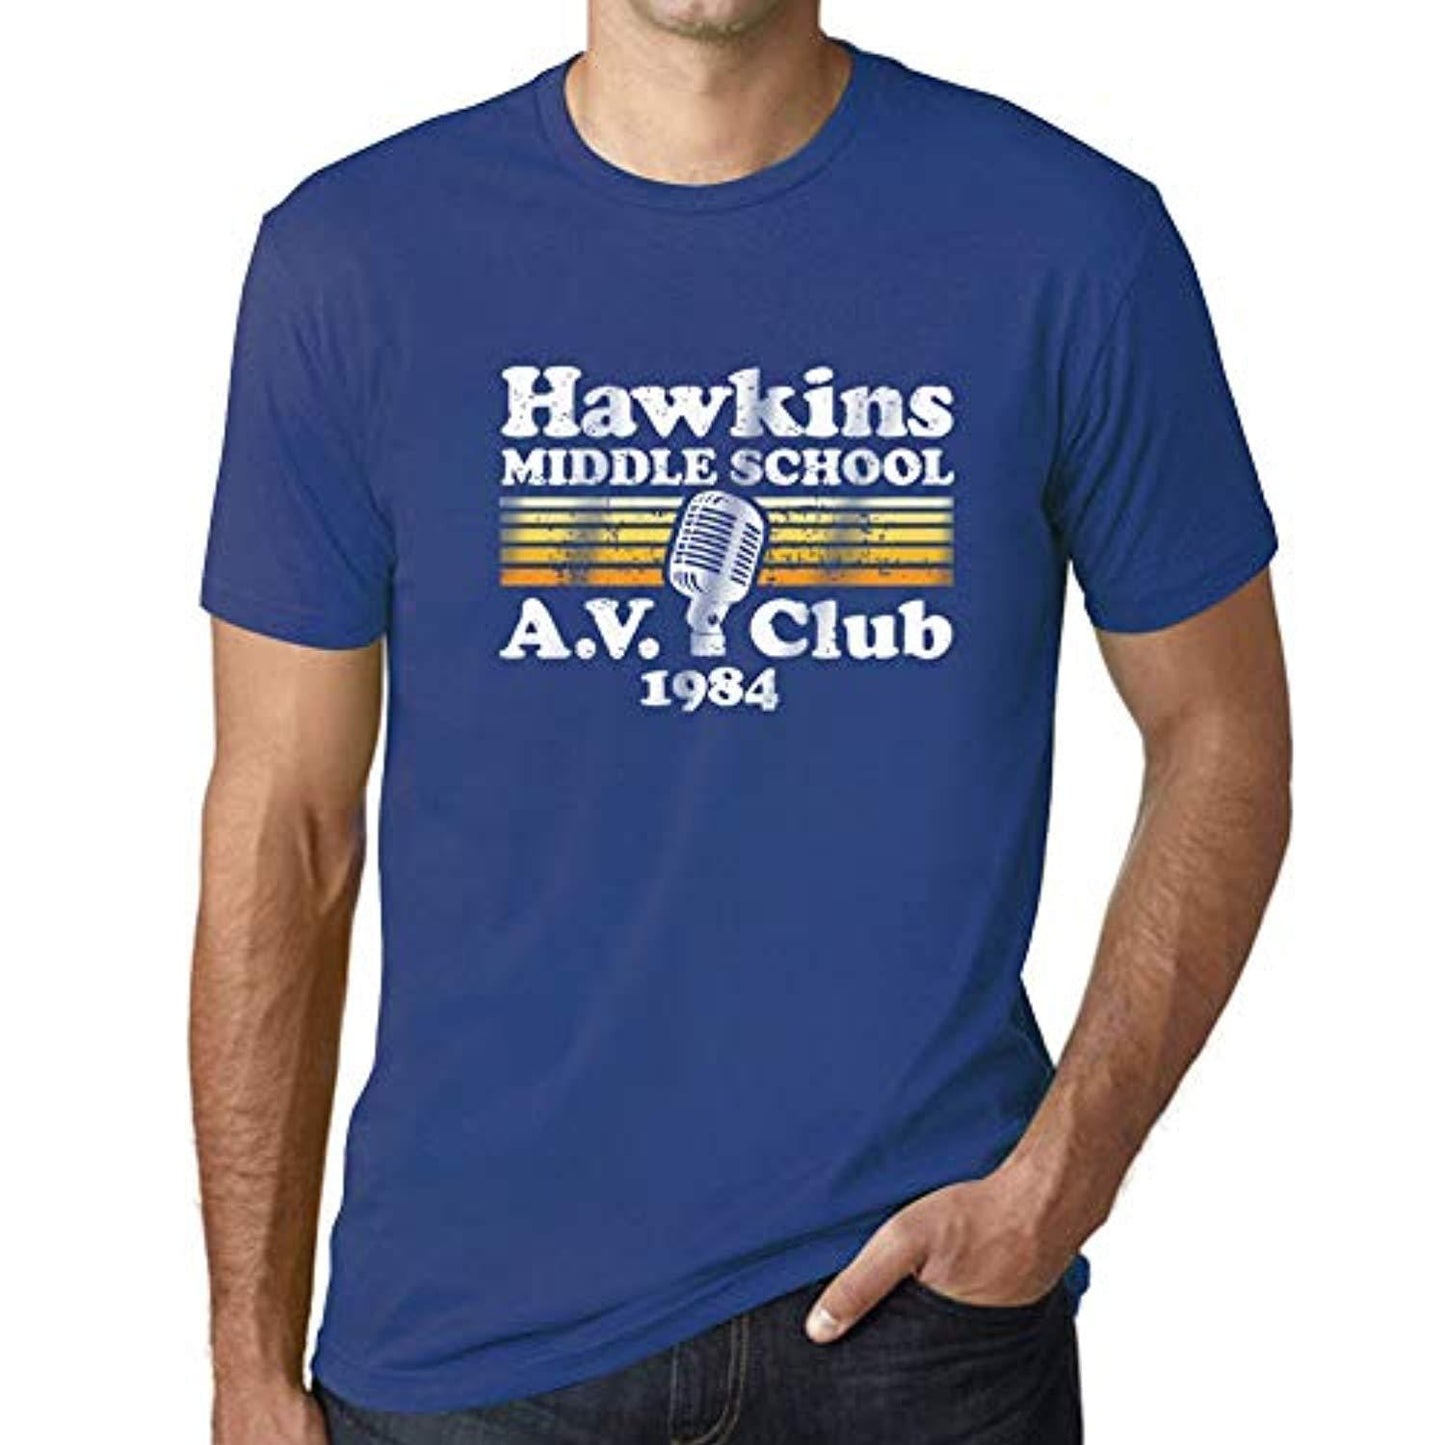 Ultrabasic - T-shirt imprimé Hawkins Middle School AV Club pour hommes